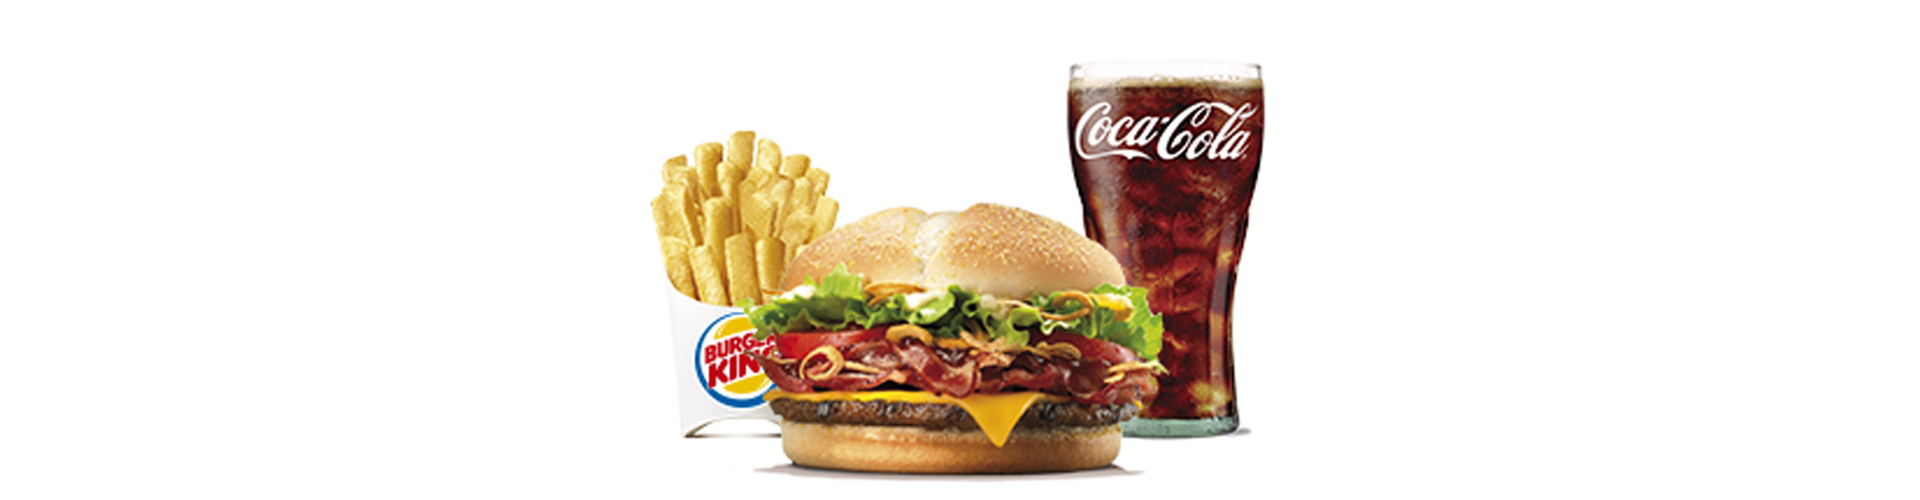 burgerking-40001713-sprite-ensalada